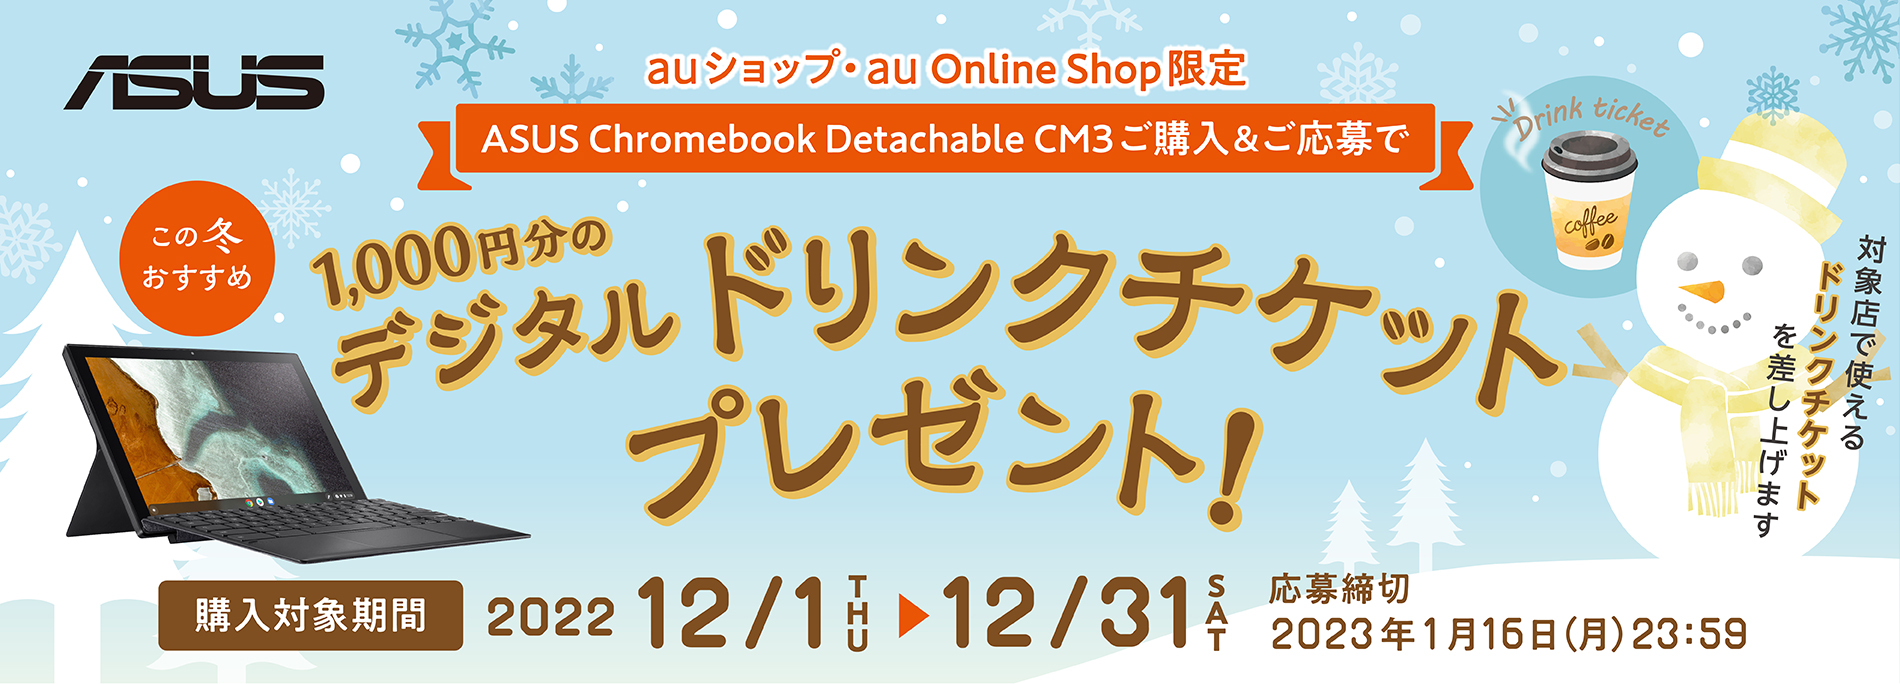 【auショップ・au Online Shop限定】ASUS Chromebook detachable CM3 購入で1,000円分のデジタルドリンクチケットプレゼント！